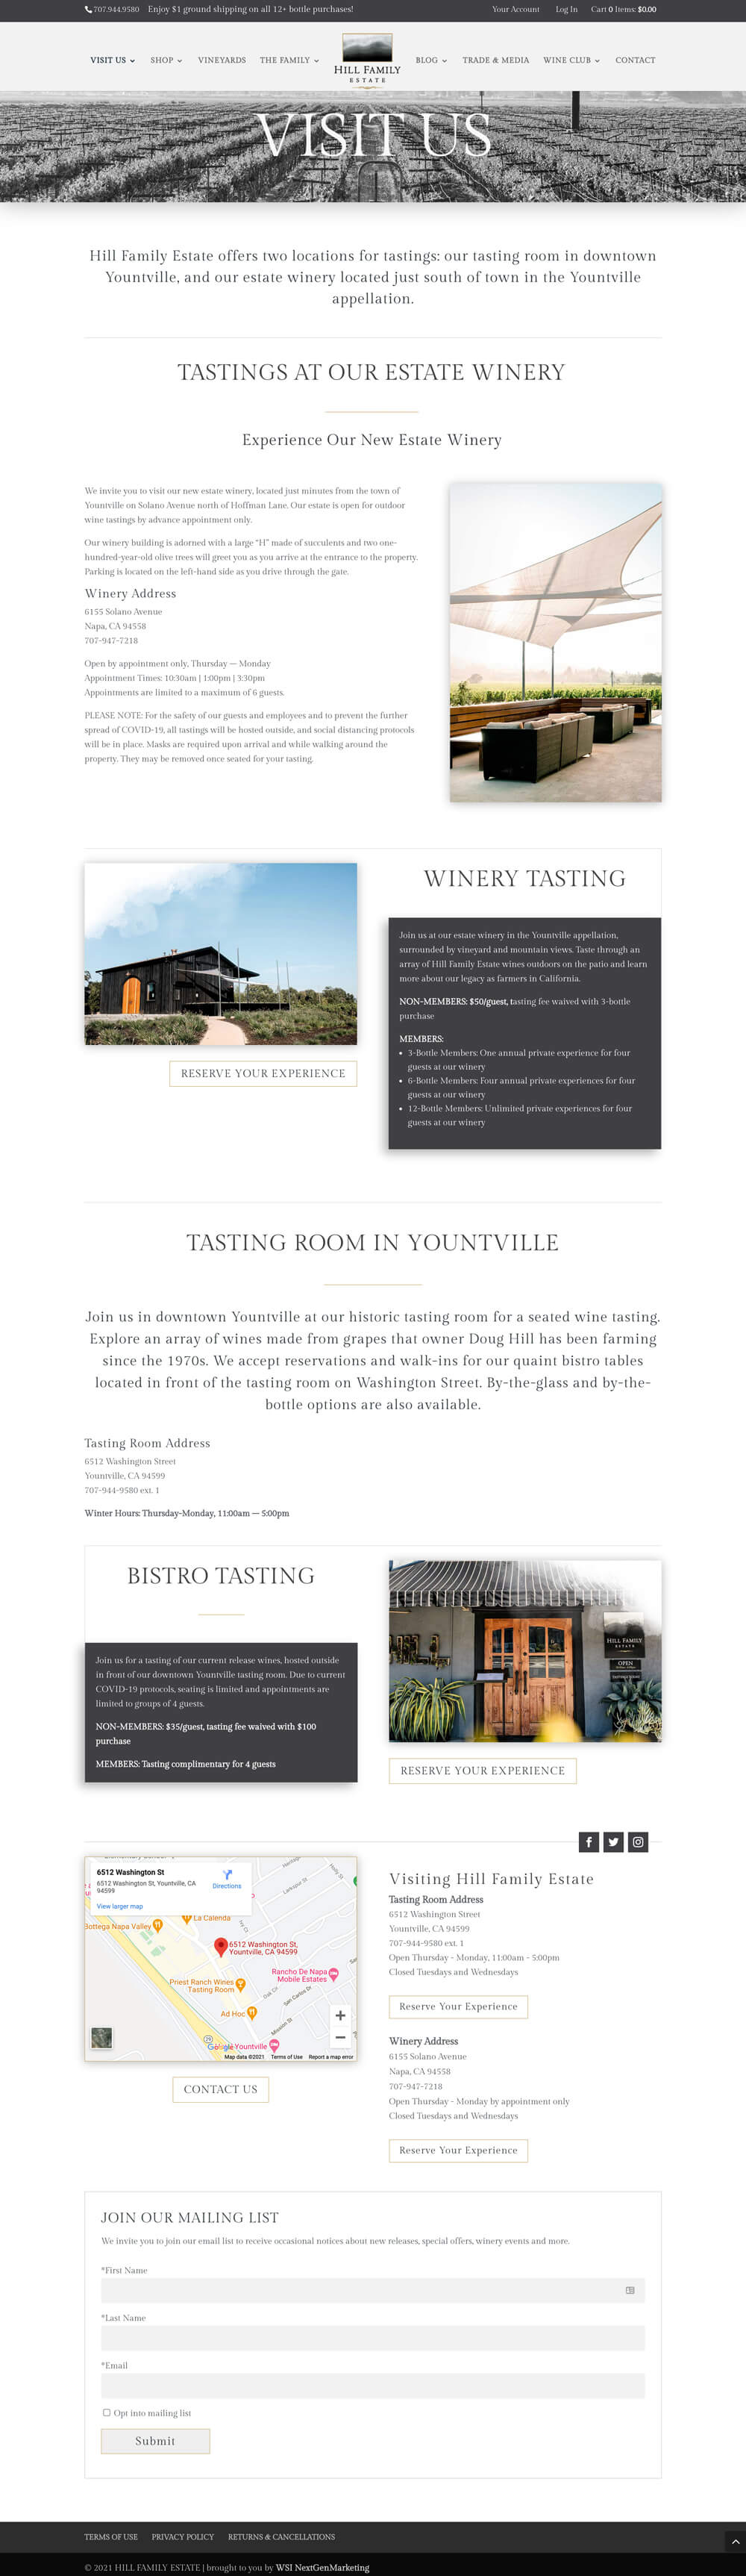 bell-wine-club-winery-website-design